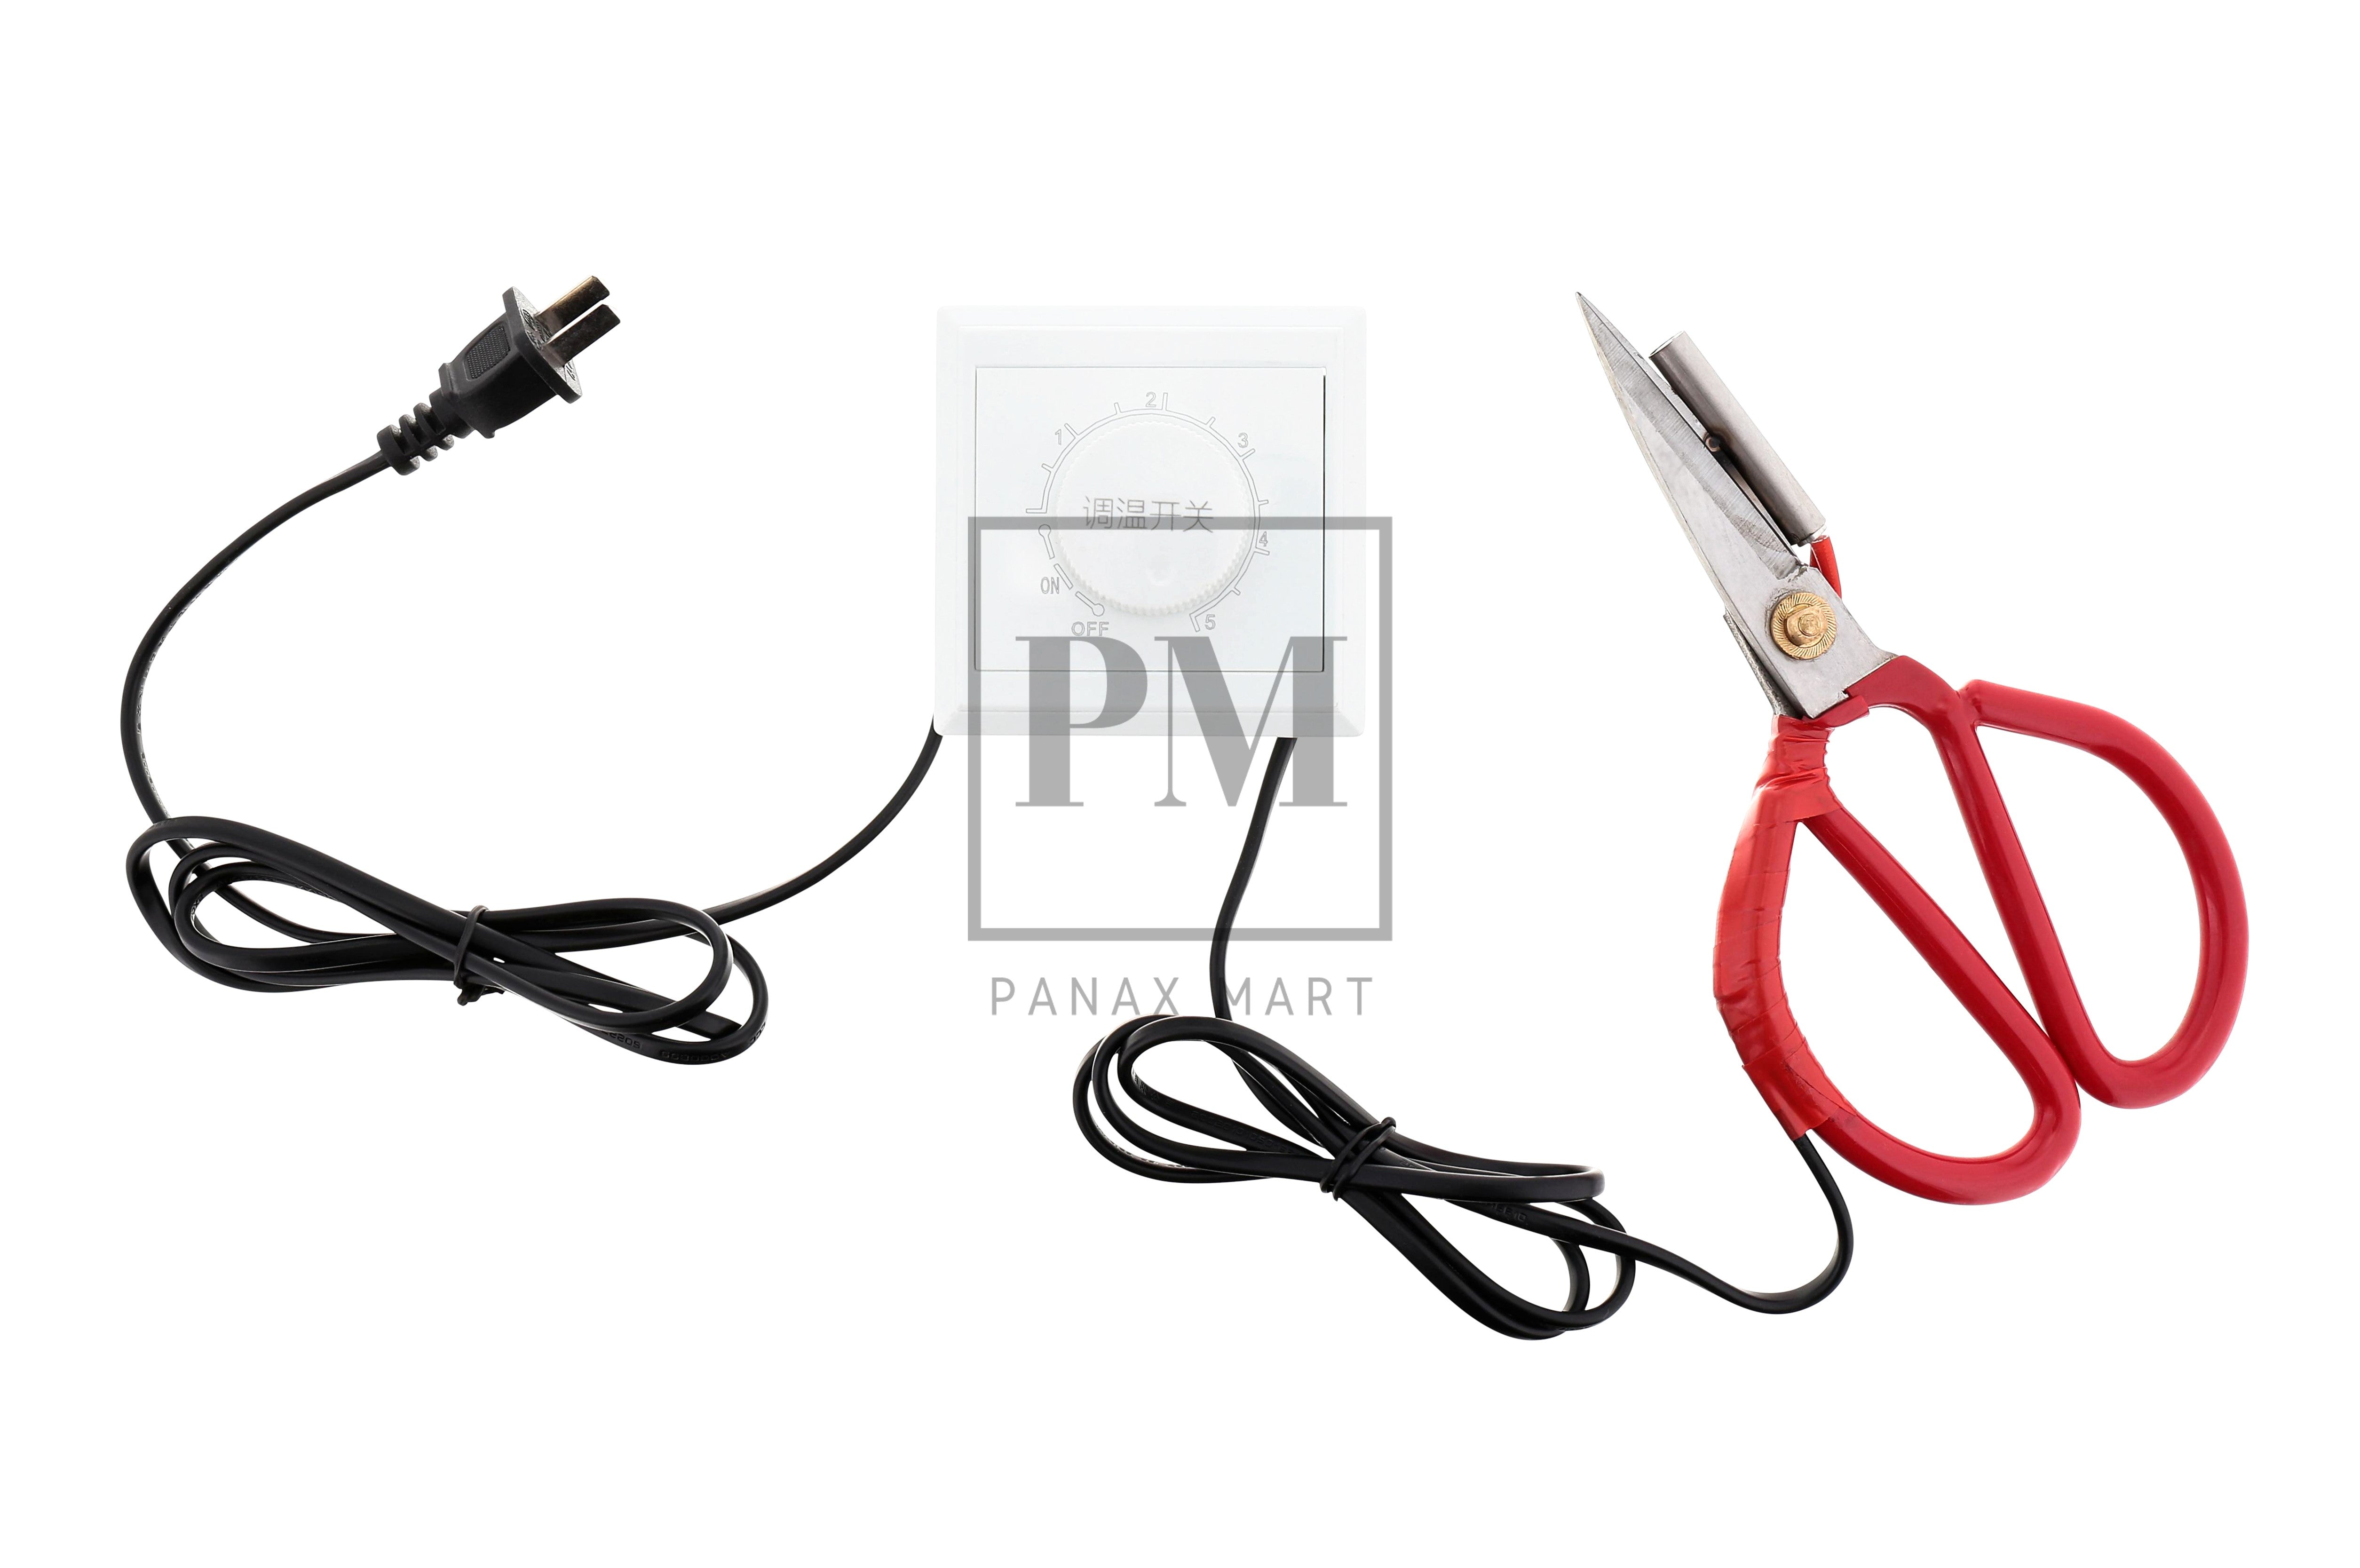 Electric Heated Scissors - Panax Mart